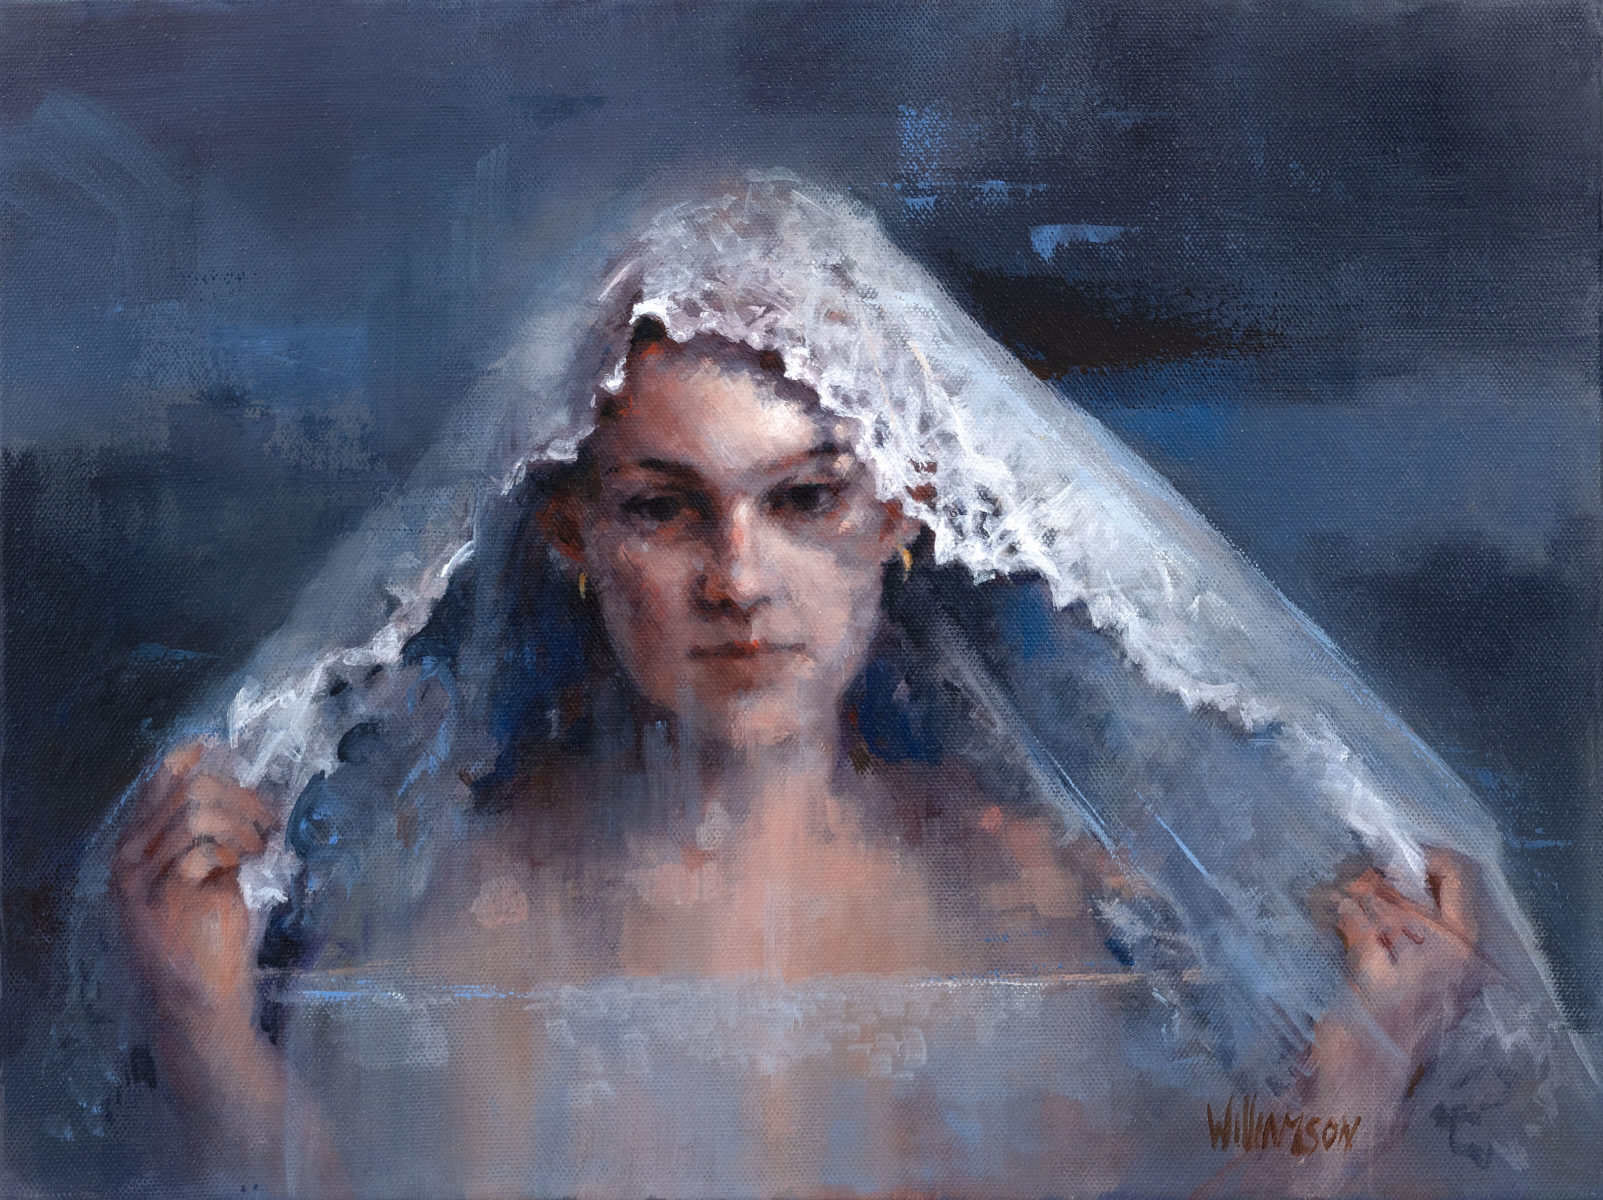 Lace Veil | Jan Williamson | Oil on canvas | 31 x 41 cm | $3,900